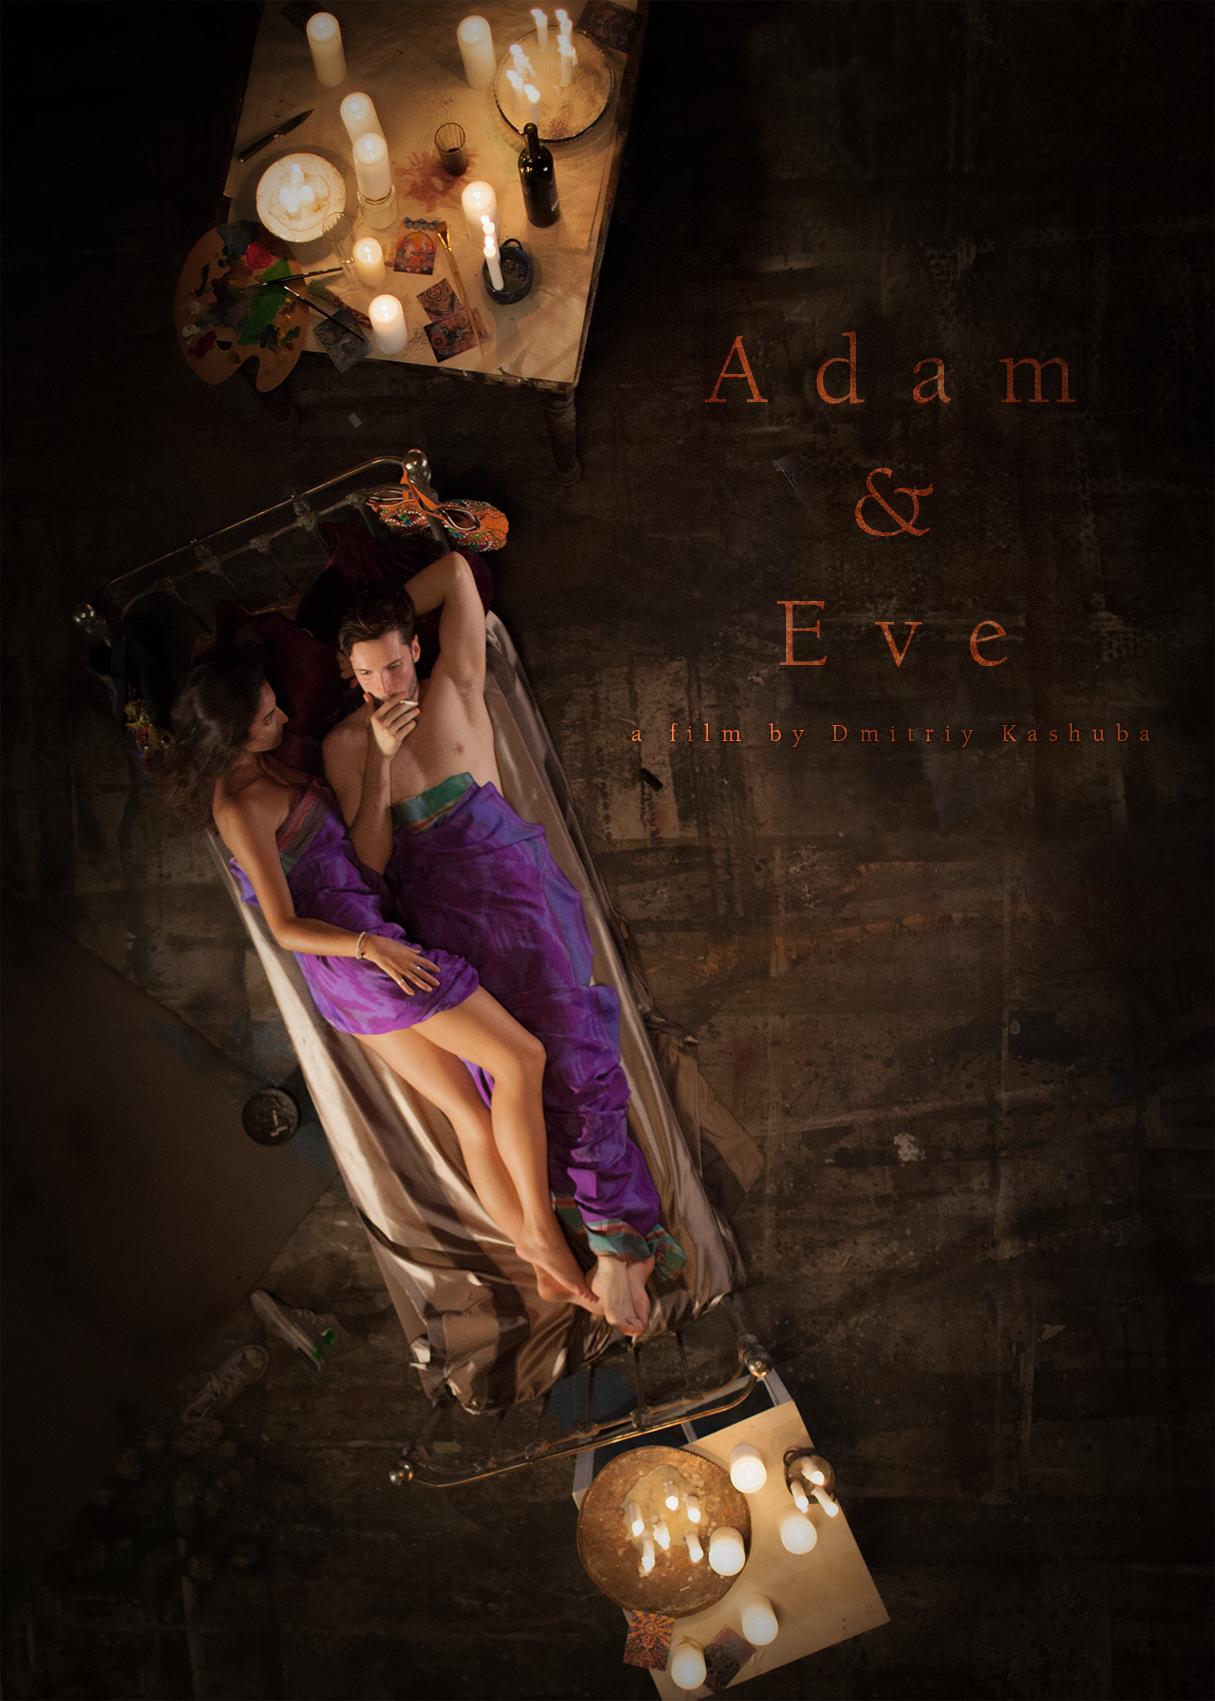 cole everett share adam and eve production company photos